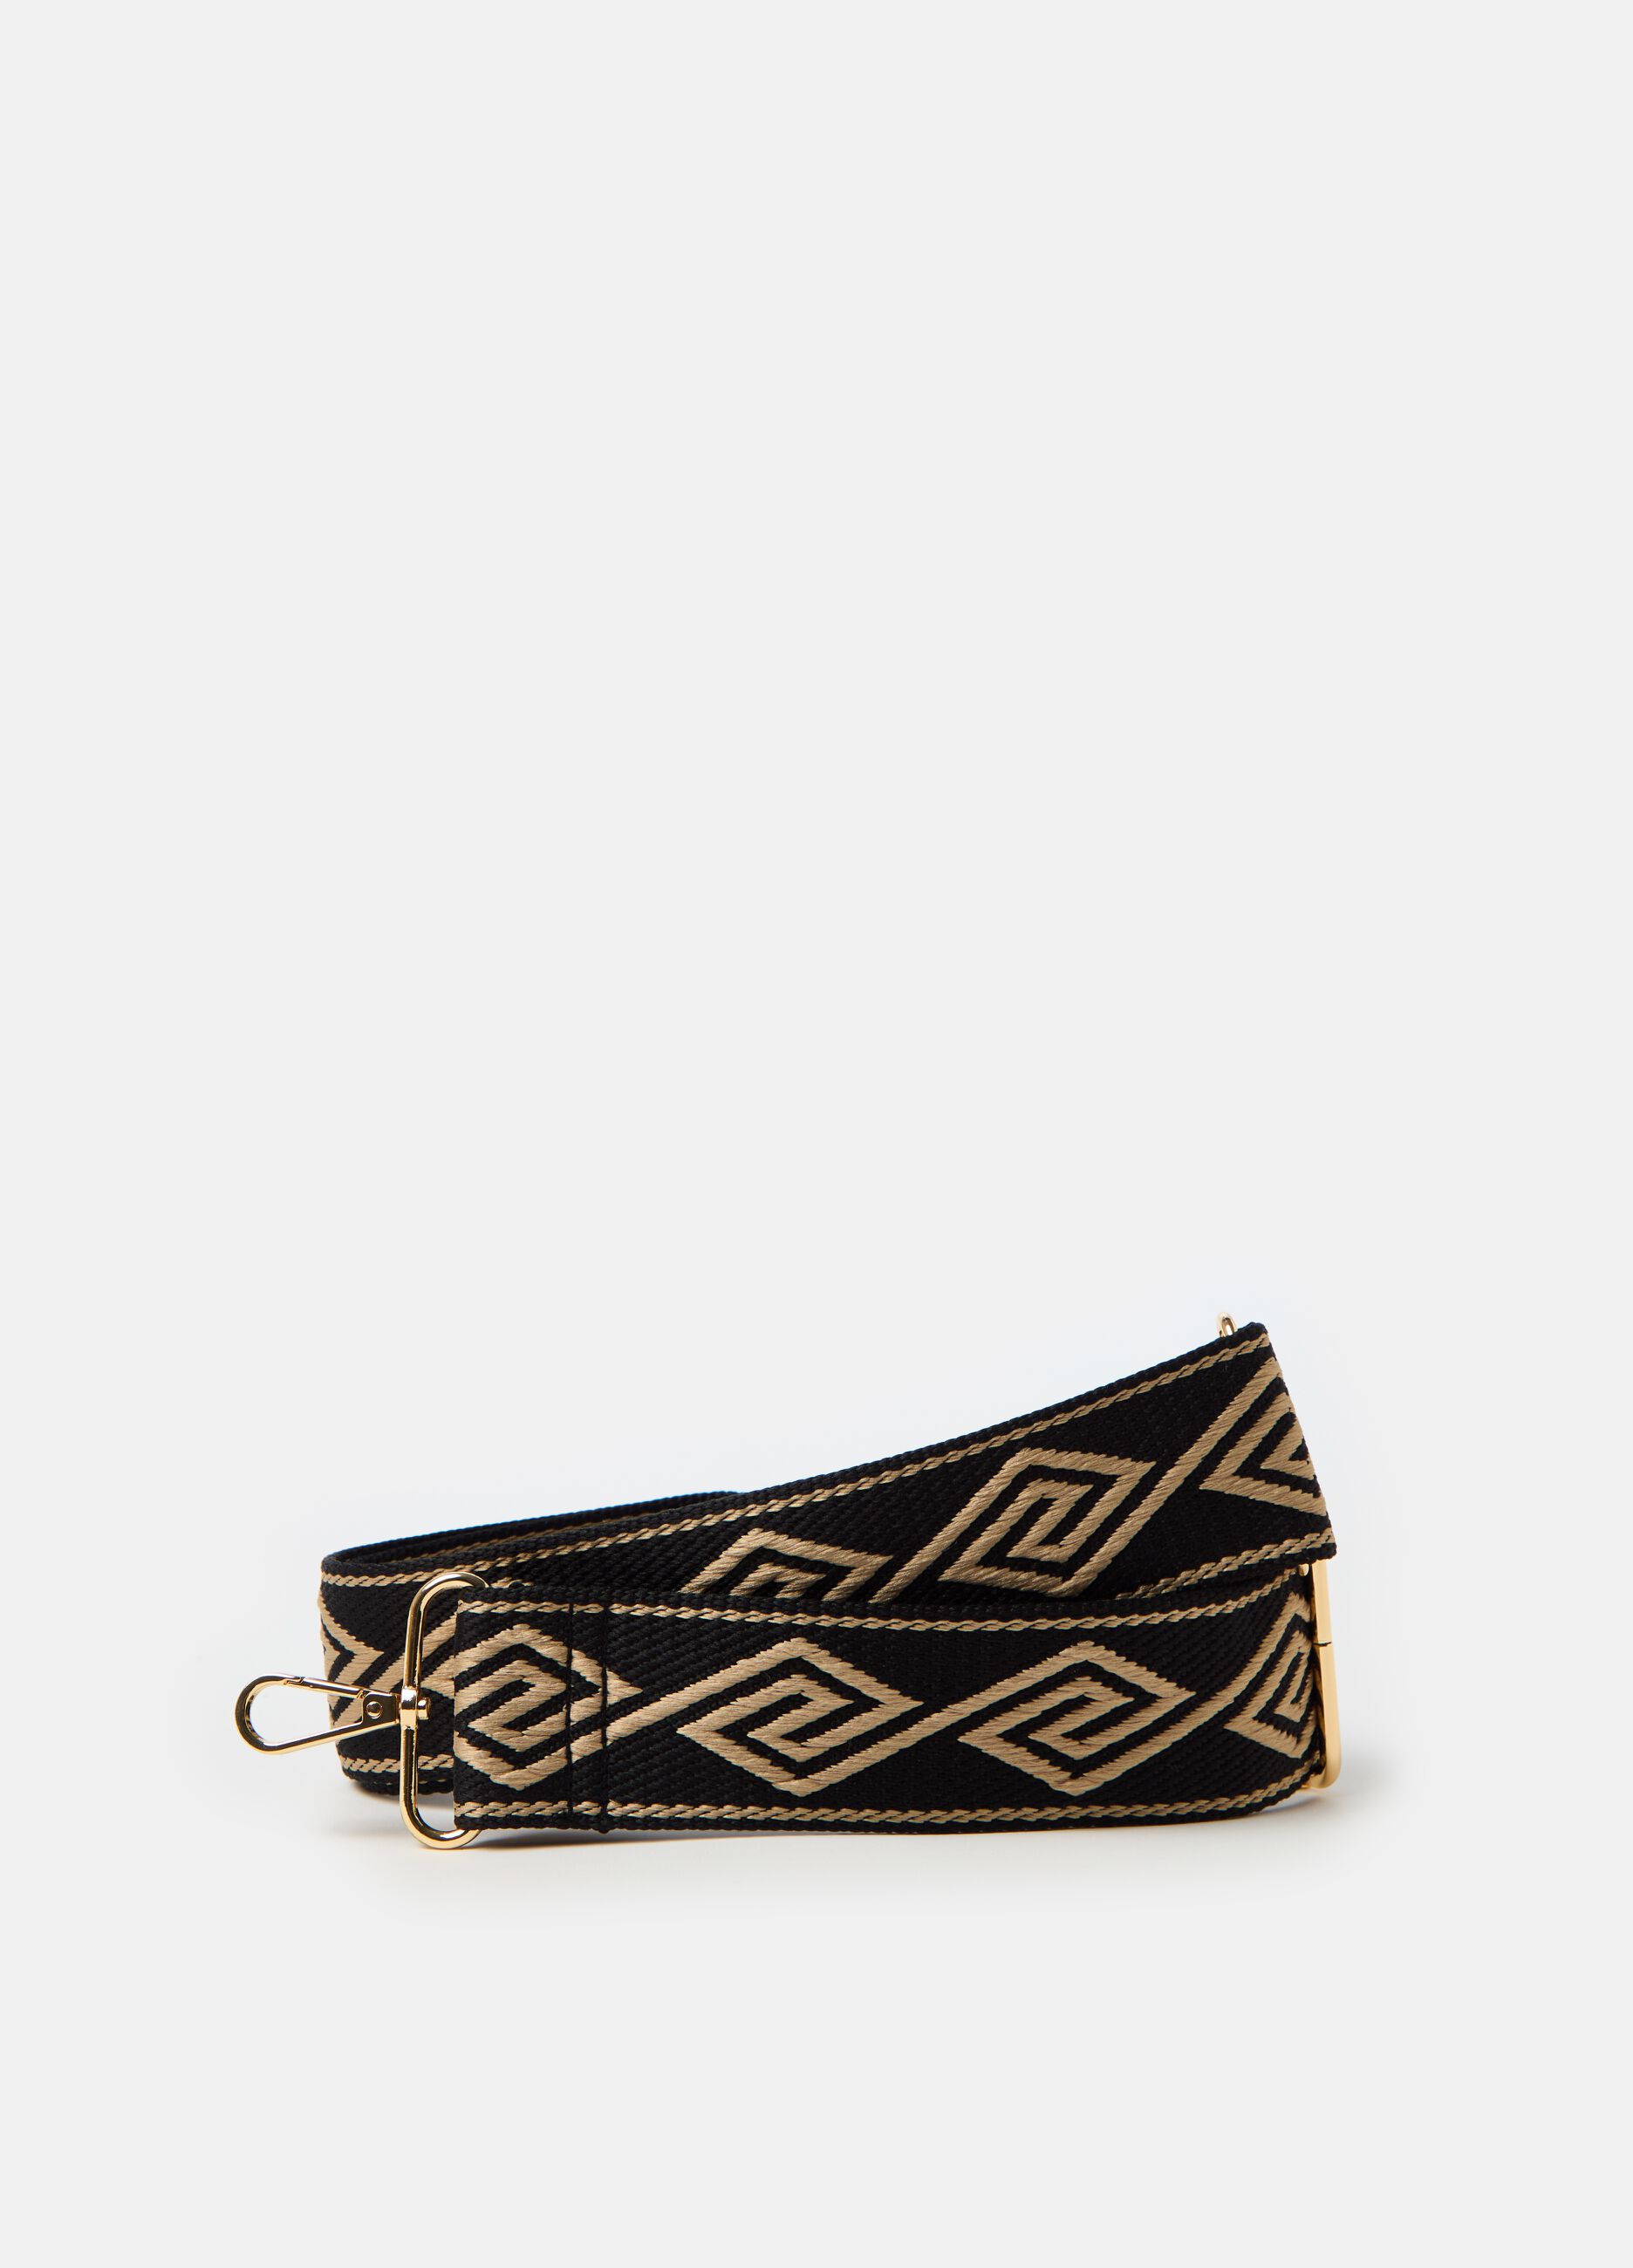 Bag strap with geometric pattern